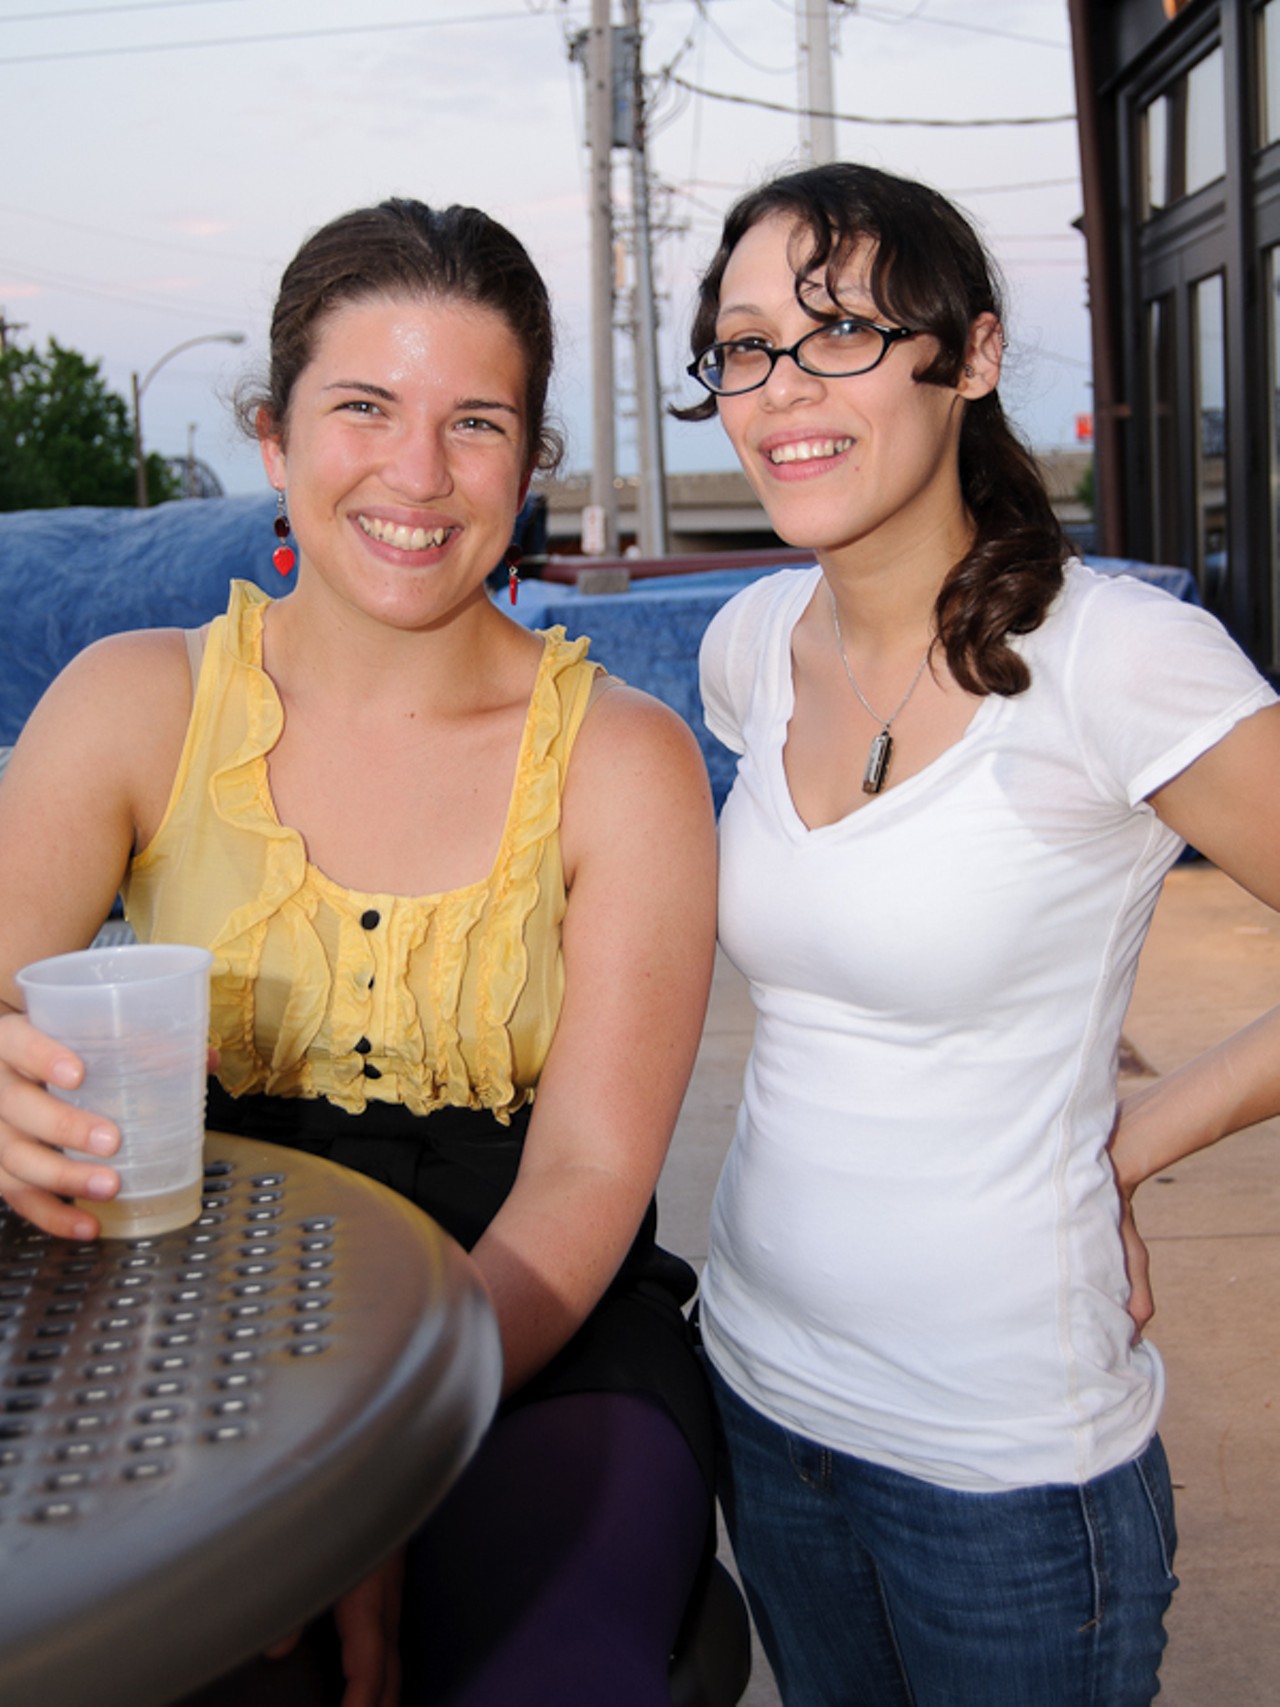 Kristen Marie and Lori, St. Louis locals, debated the merits of Farrar and Tweedy over beers.